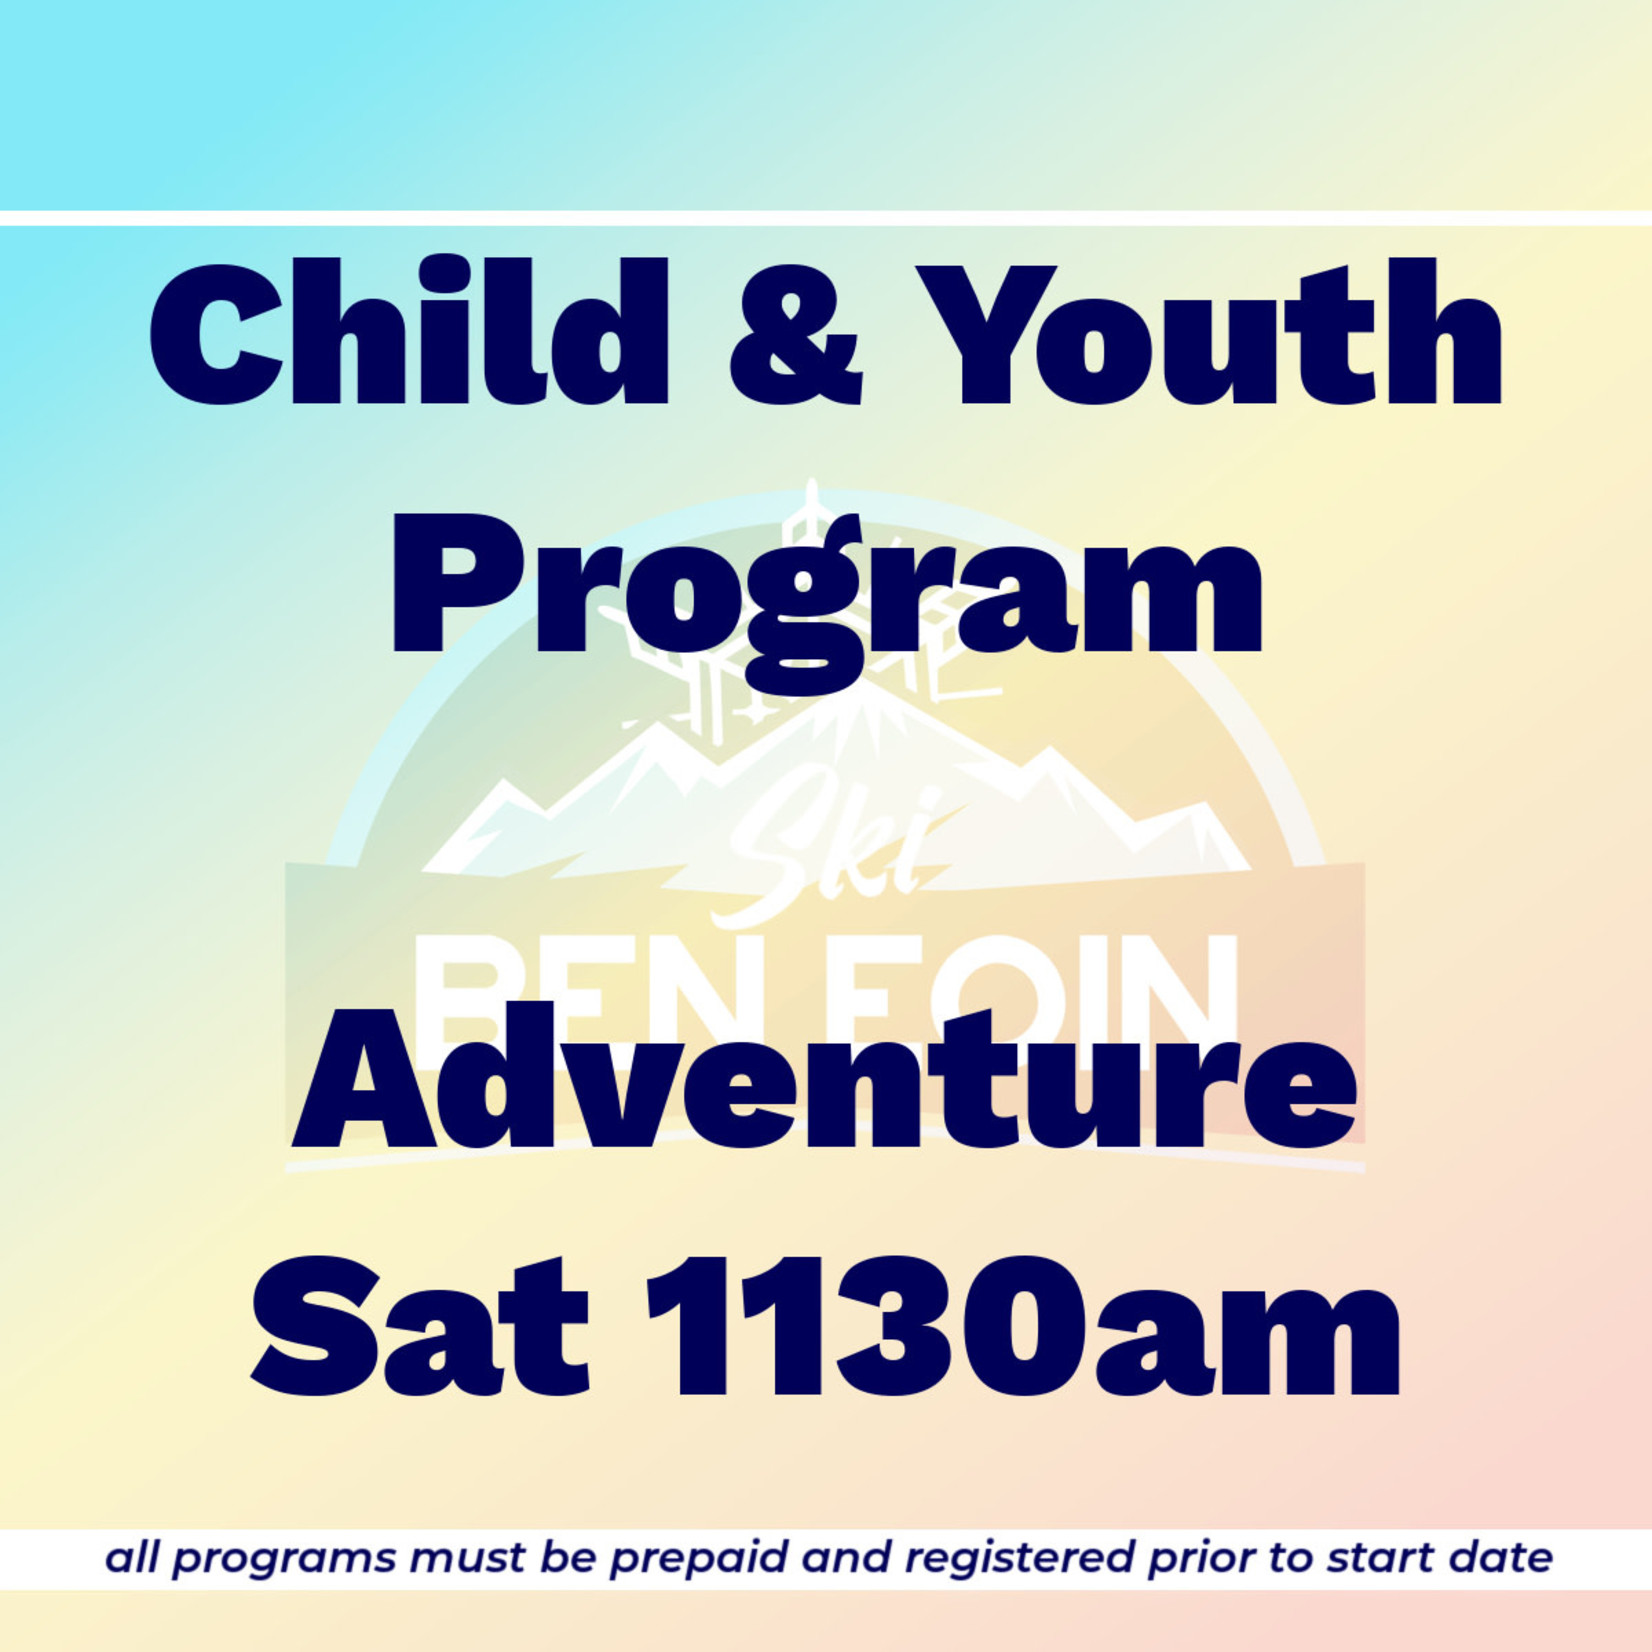 Child & Youth Ski Program Adventure Sat 1130am